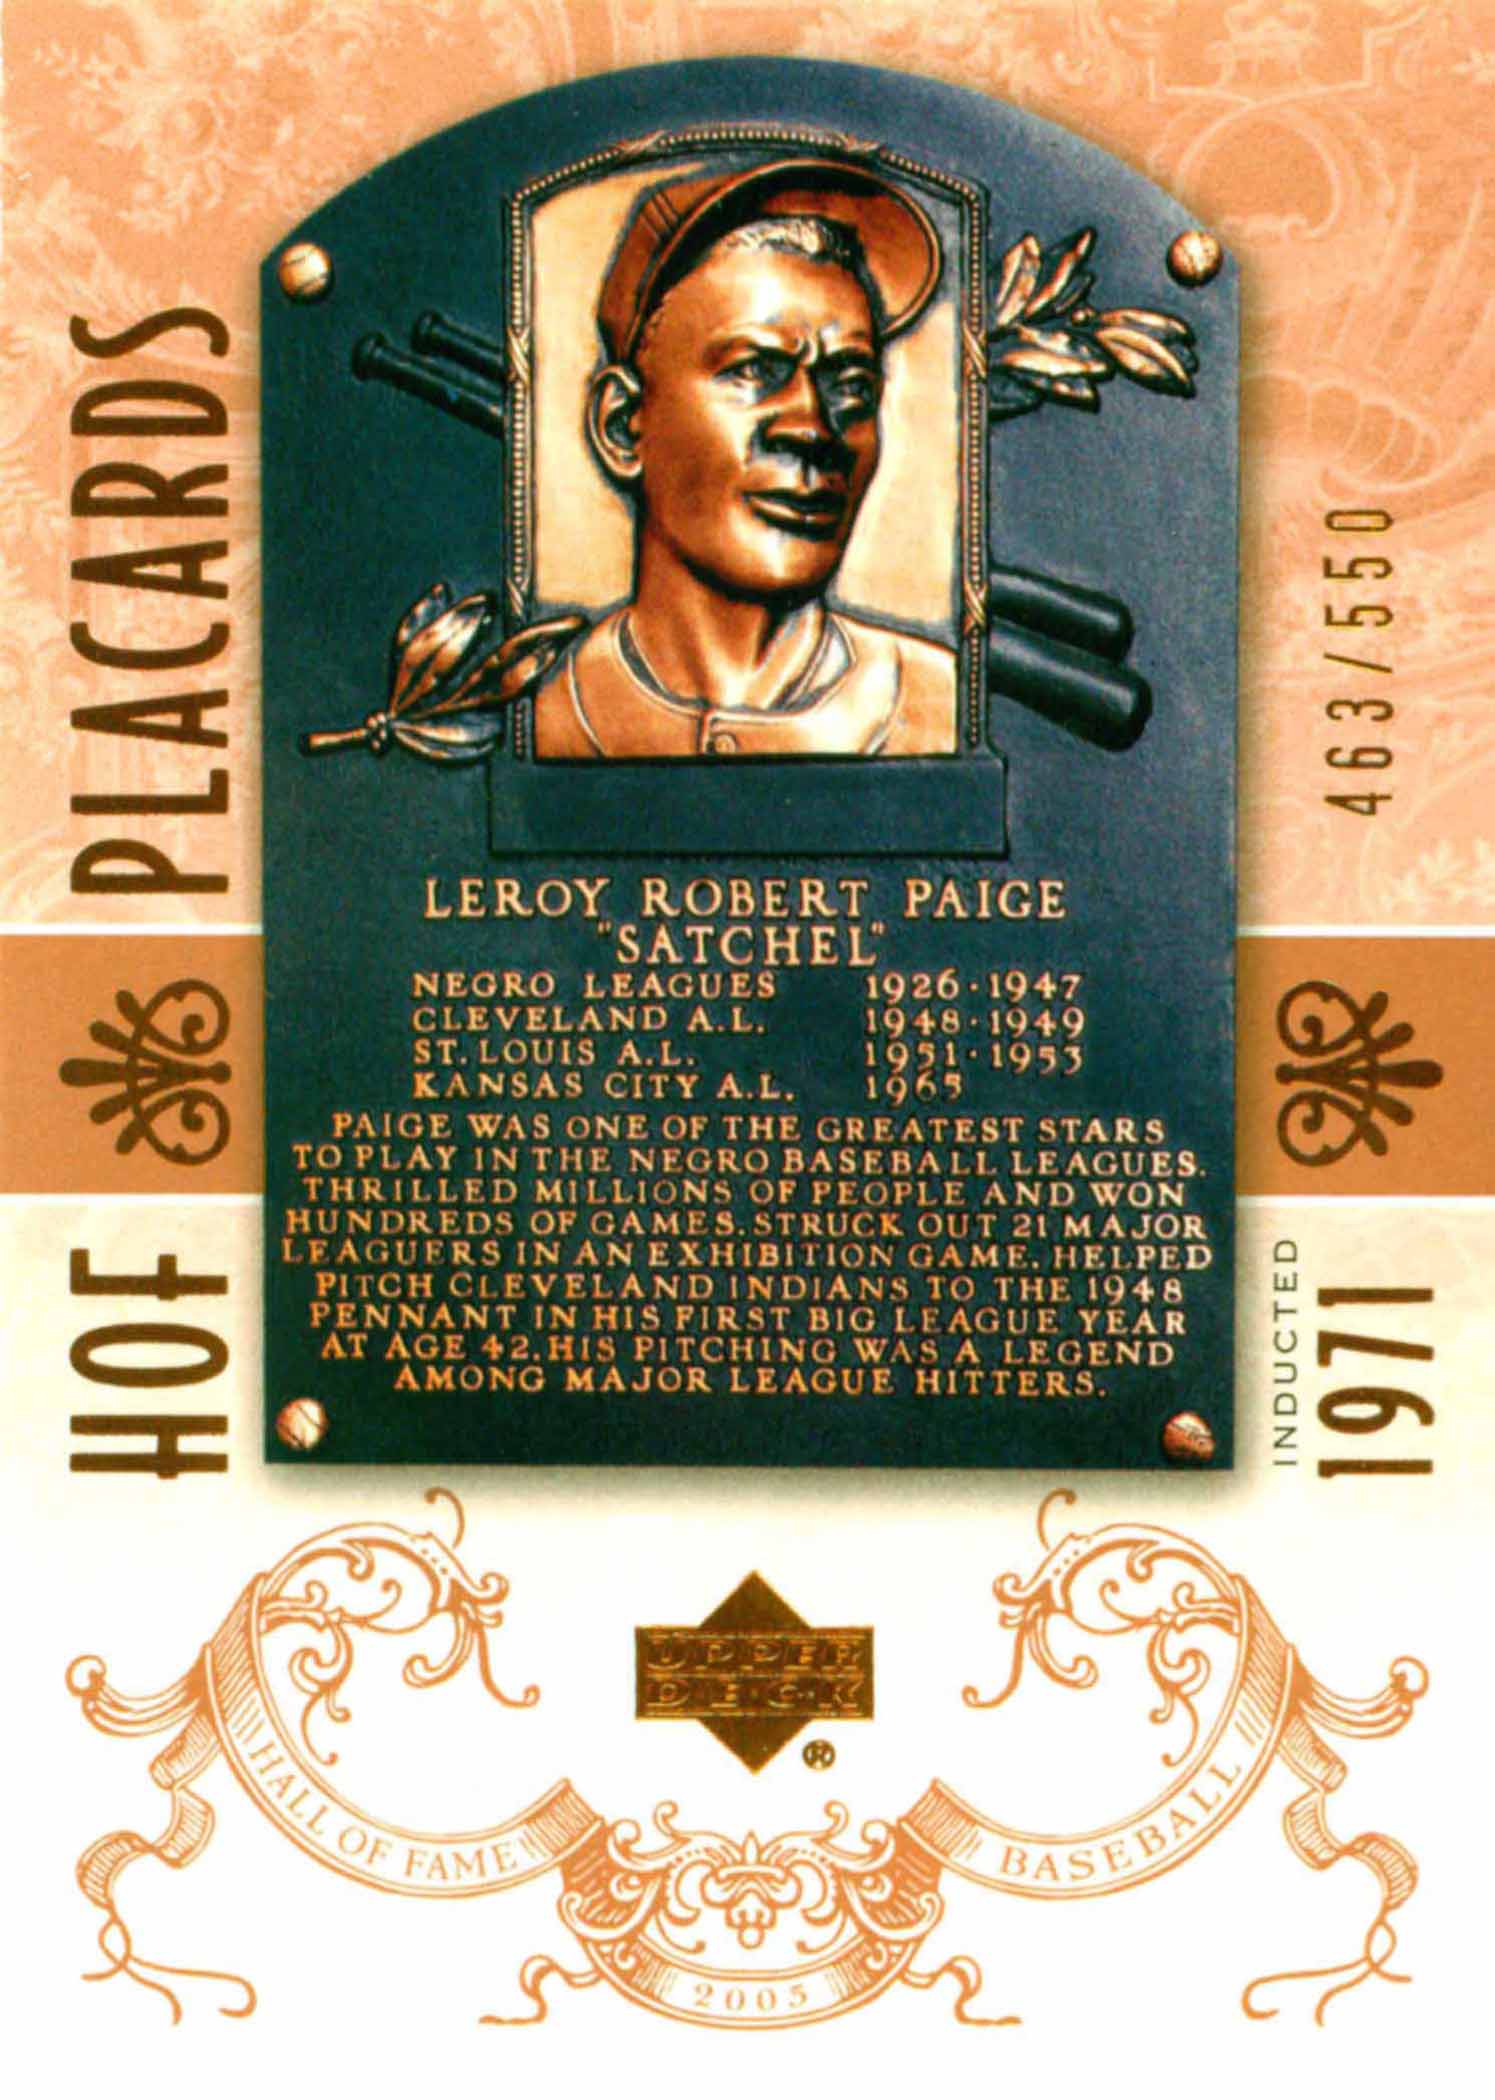 2005 Upper Deck Hall of Fame Placards